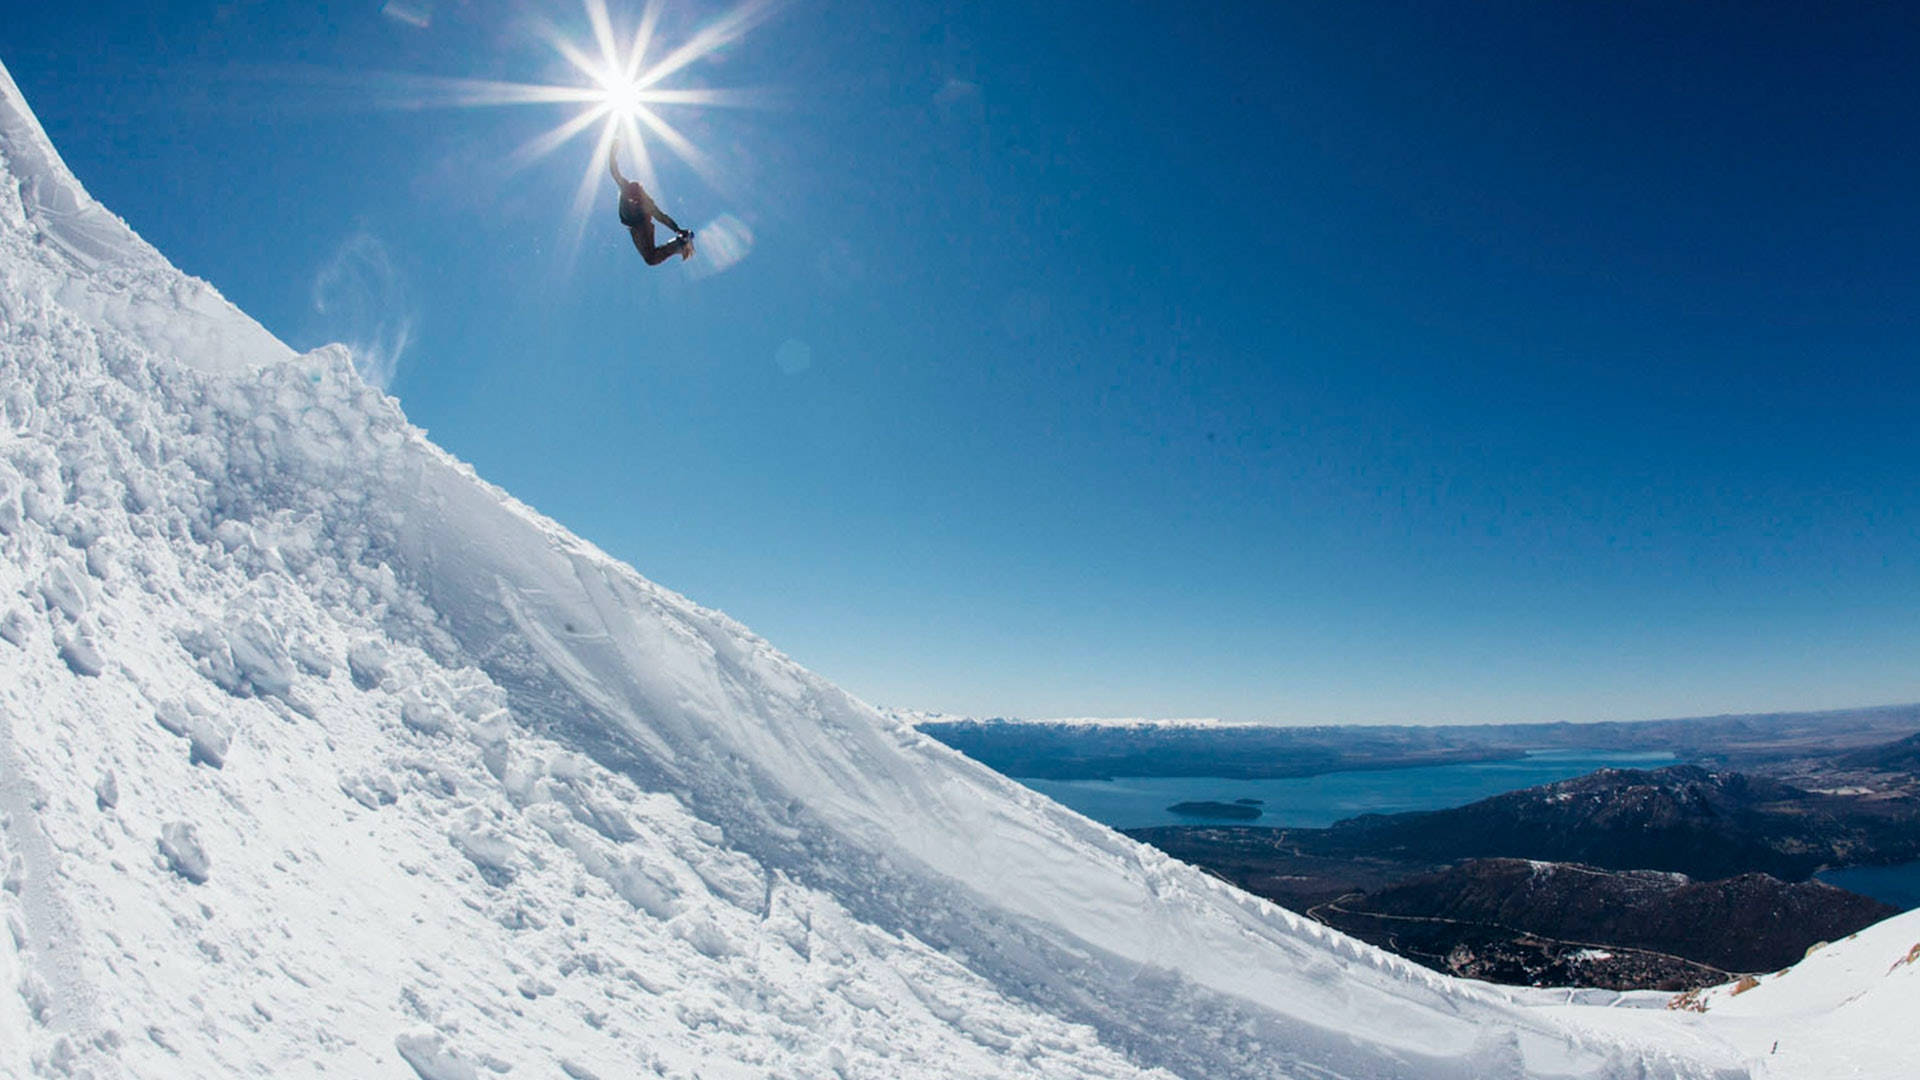 Snowboarding Under The Sun Wallpaper